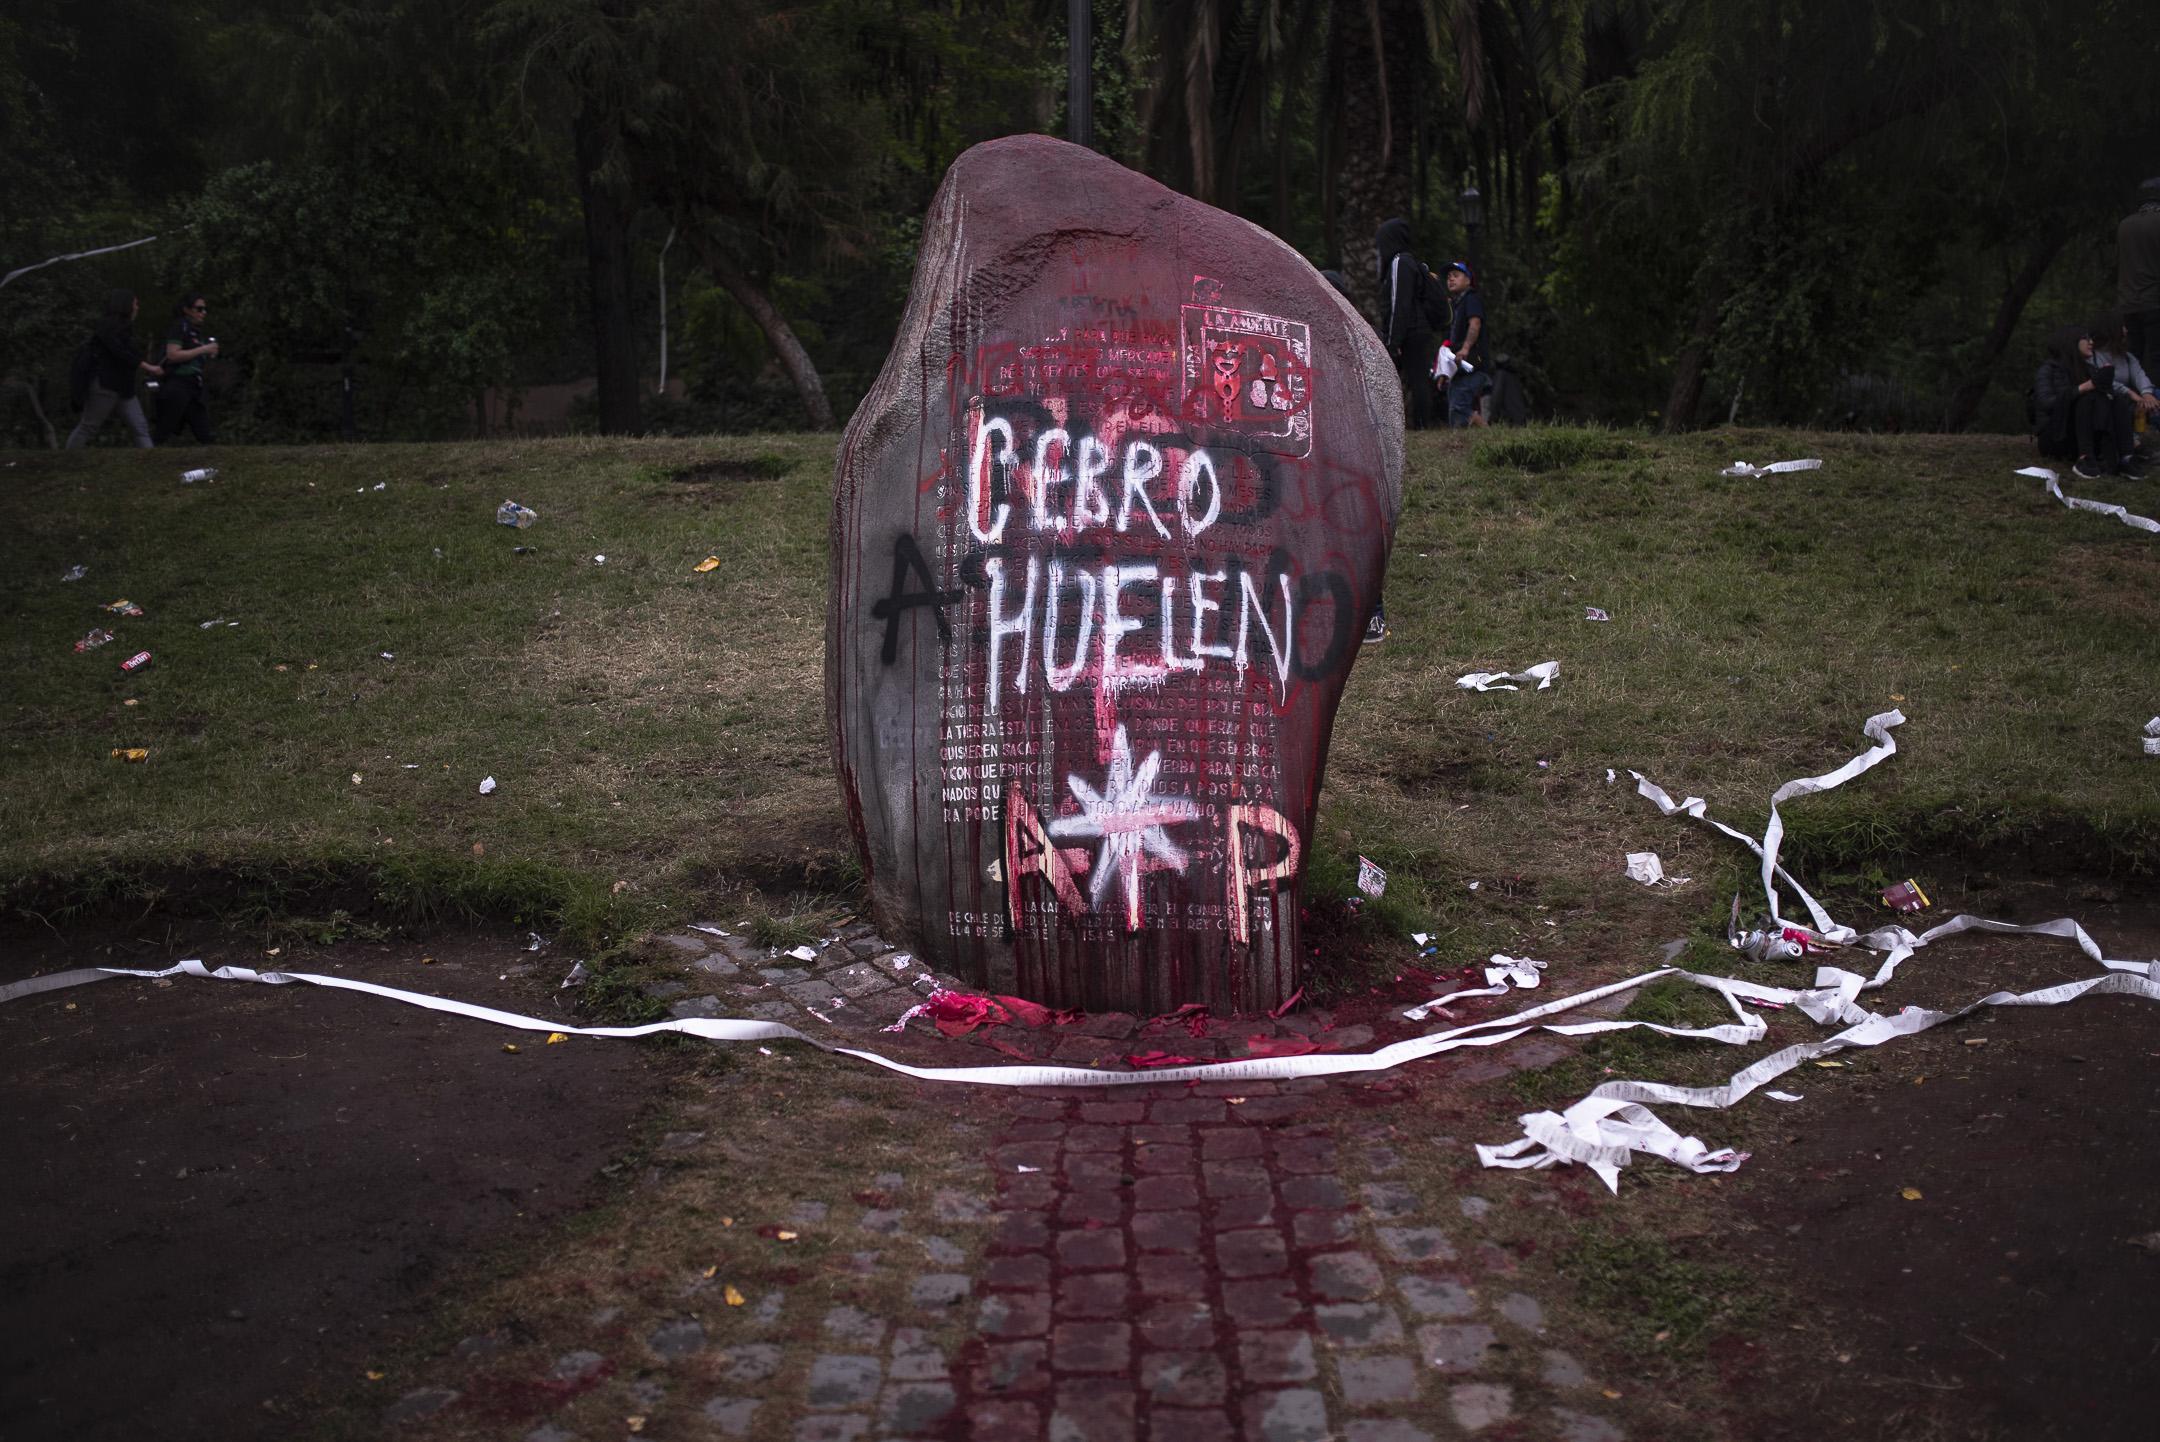 Chile / Revolt October 18